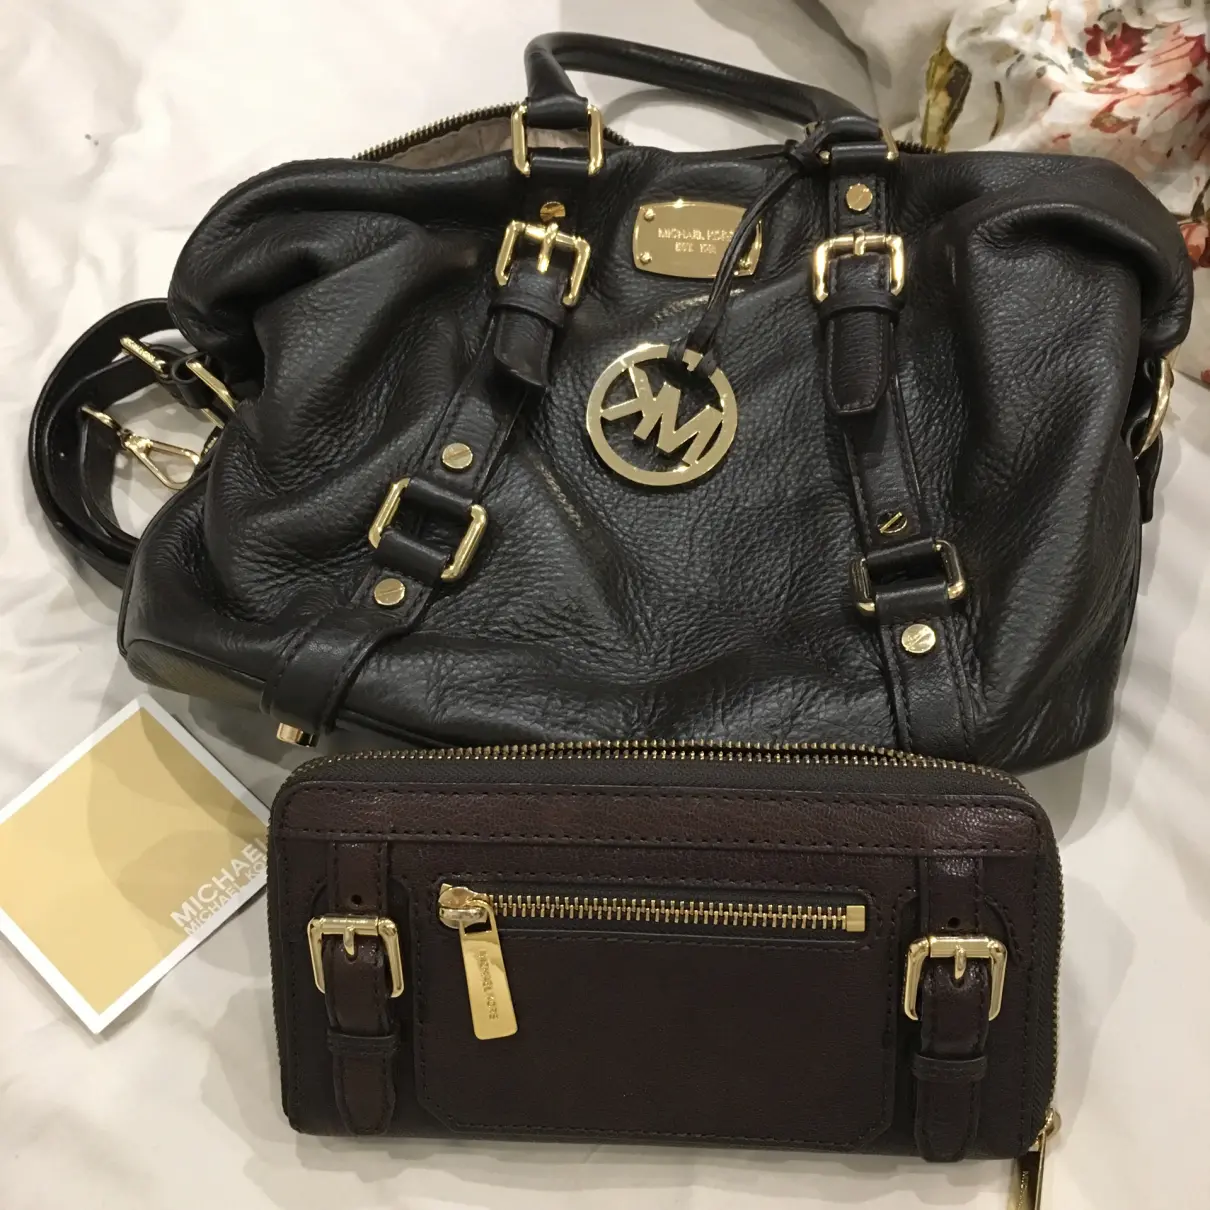 Bedford leather handbag Michael Kors